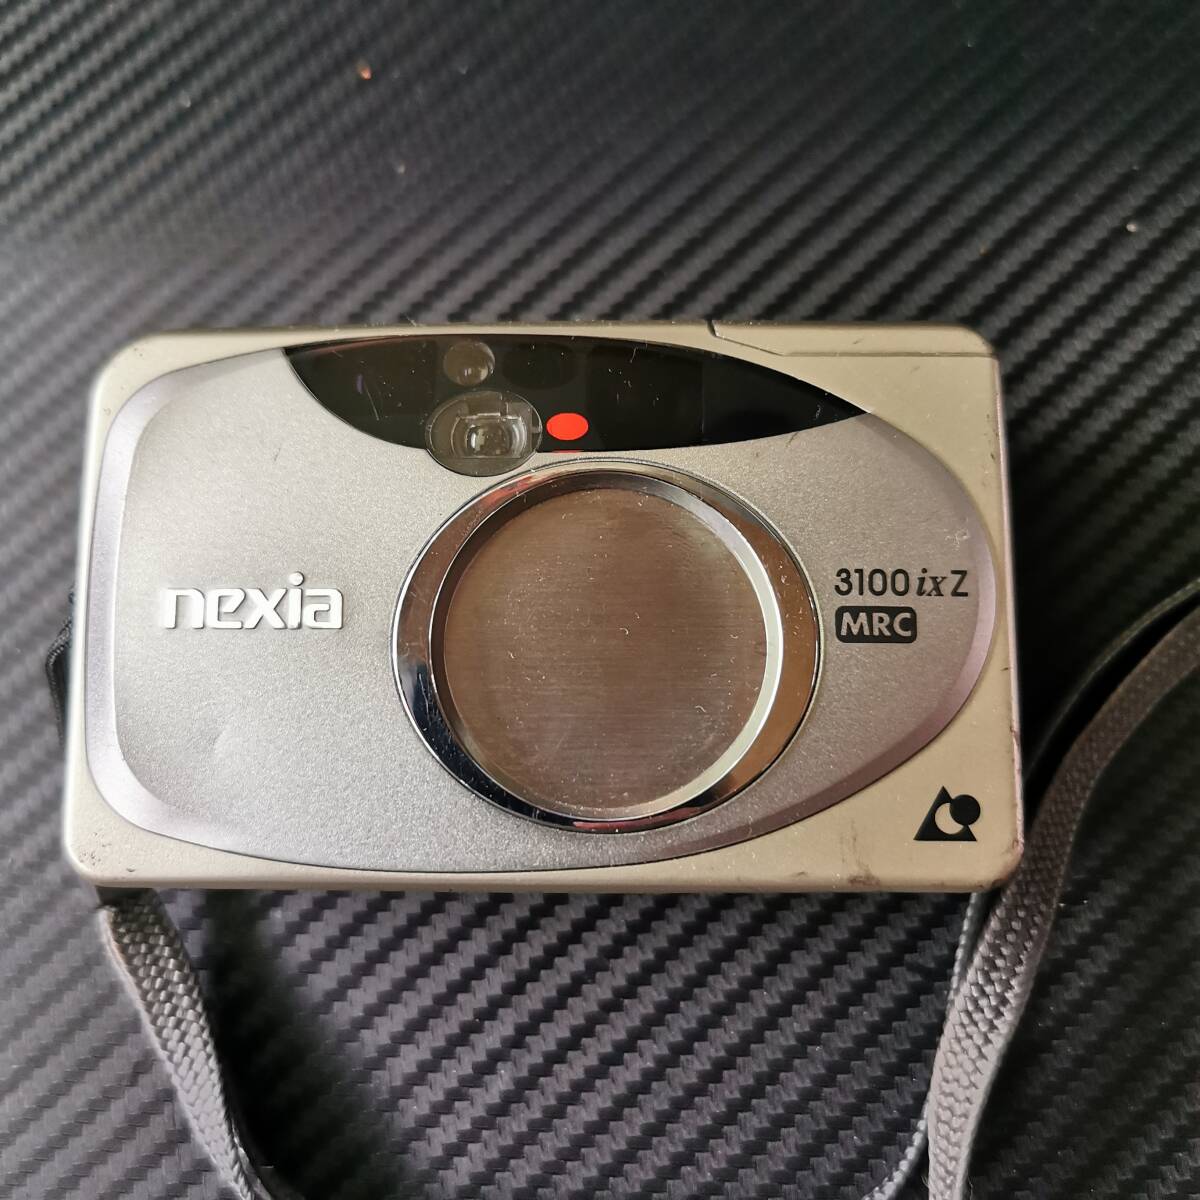 FUJIFILM nexia 3100 ixZ MRC camera secondhand goods 